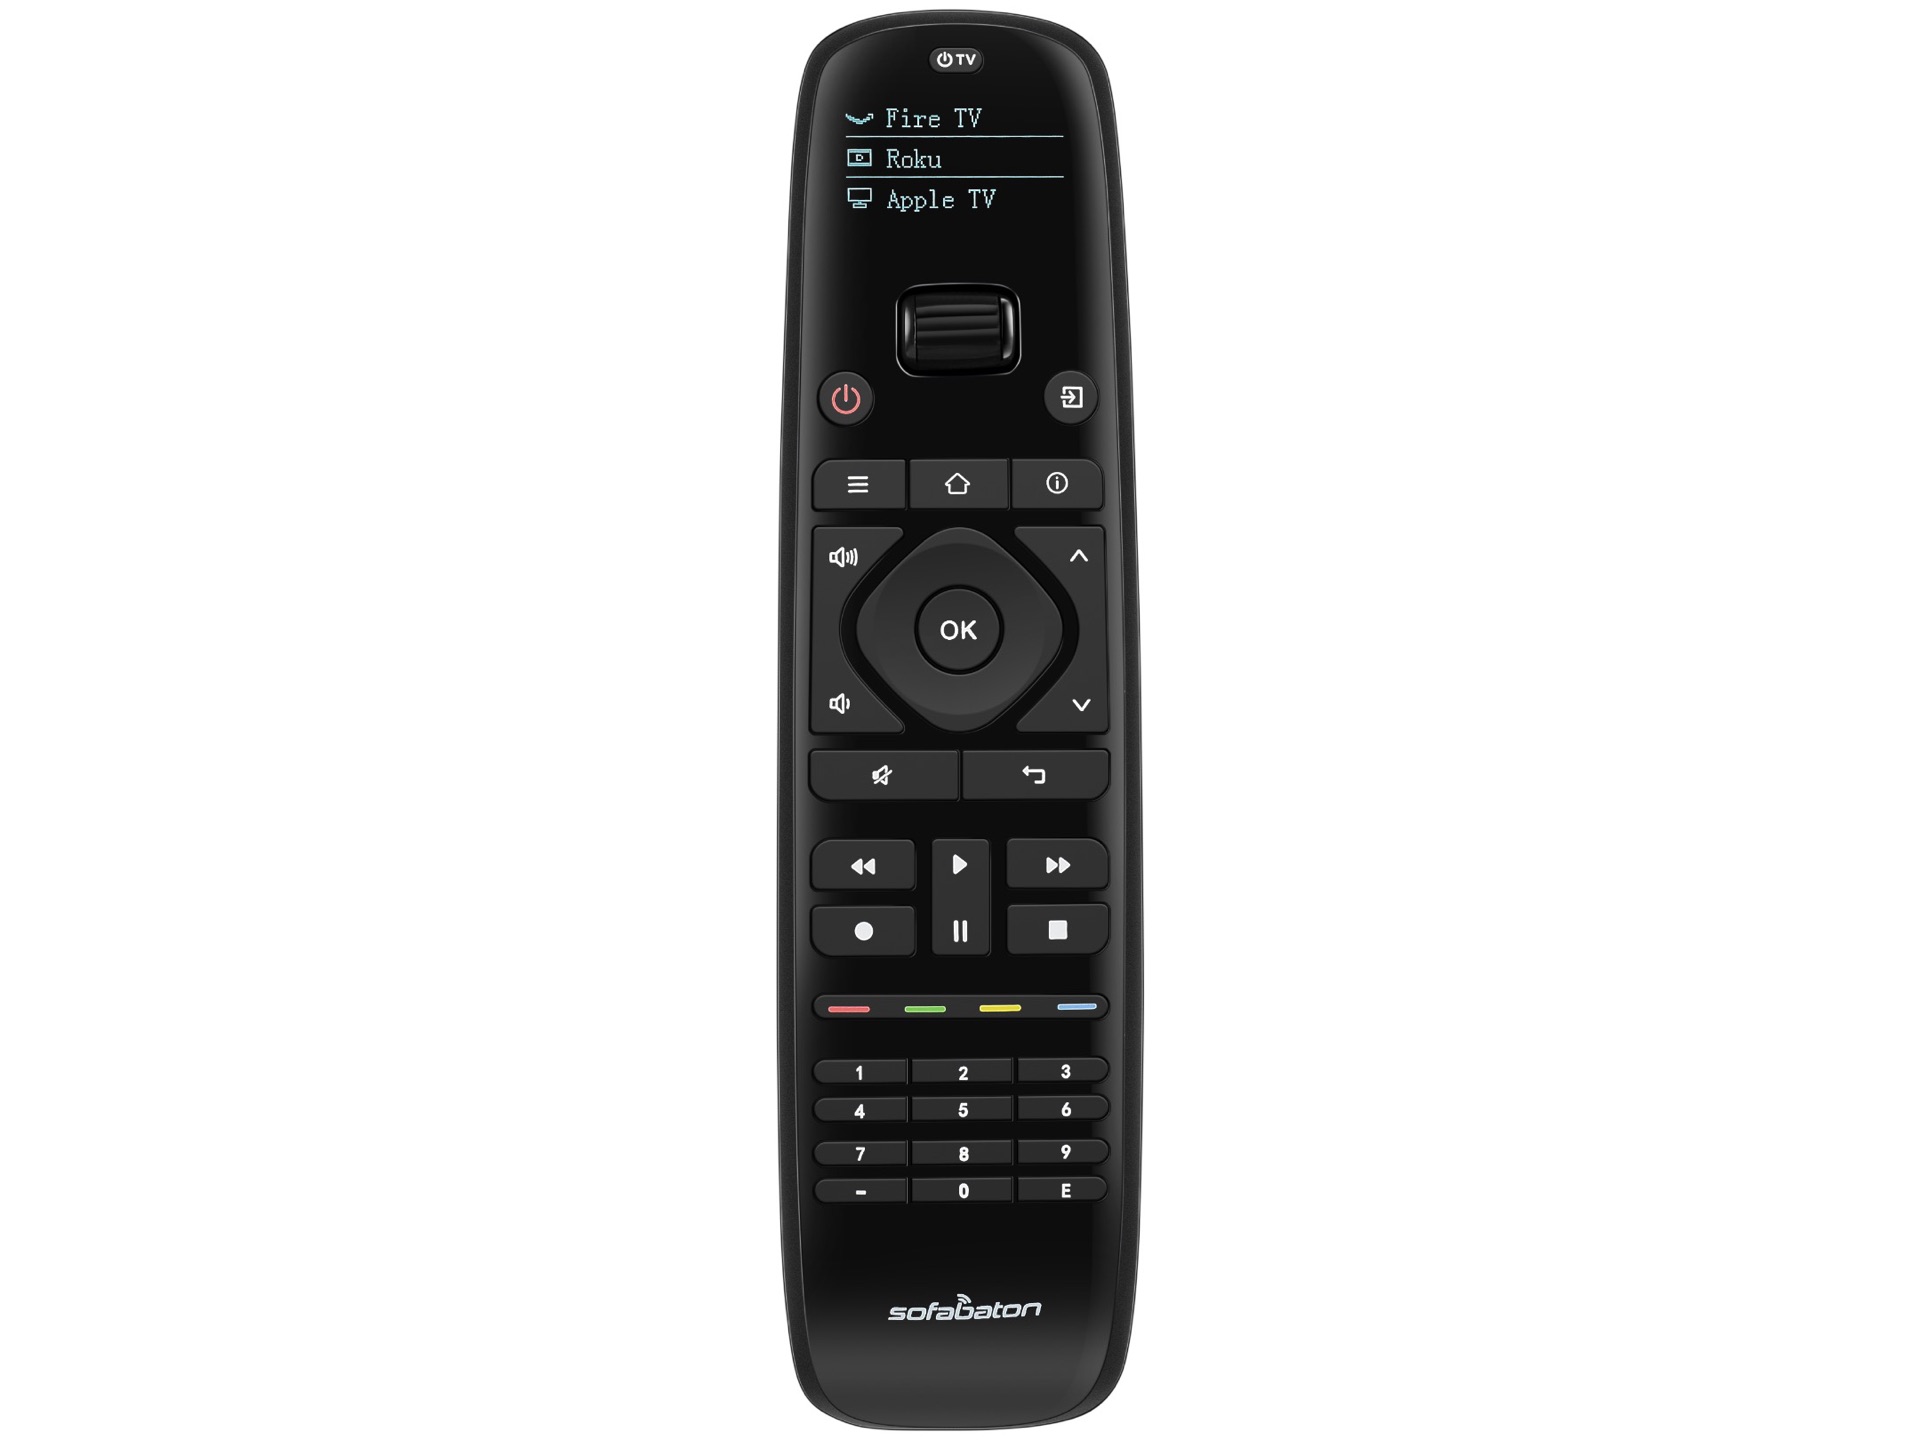 The SofaBaton U1 universal remote. ($39)